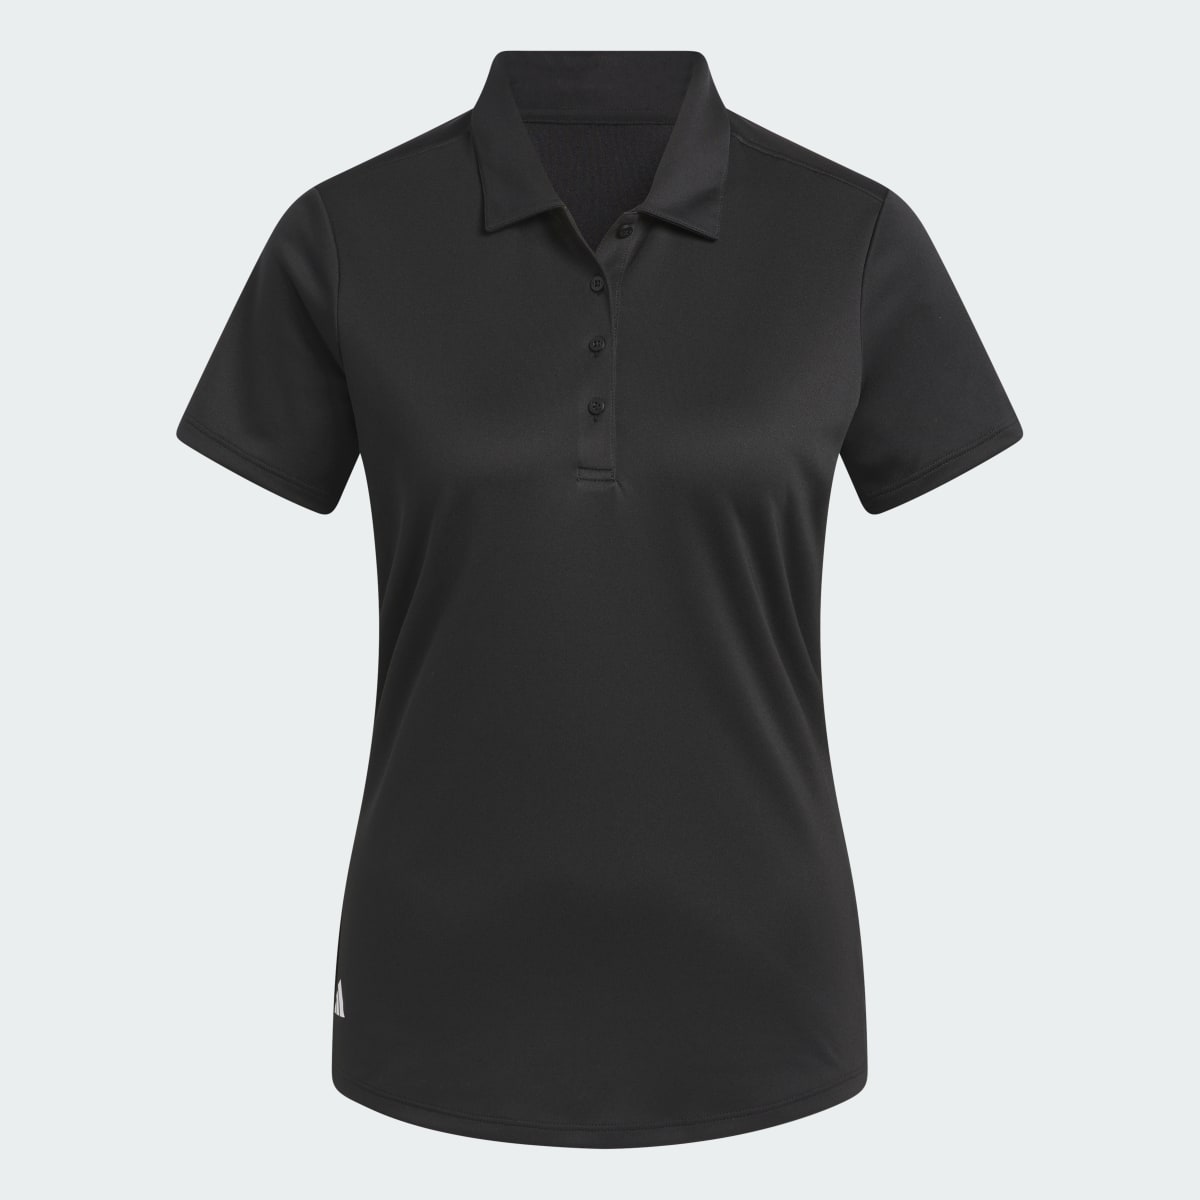 Adidas Women's Solid Performance Short Sleeve Polo Shirt. 5